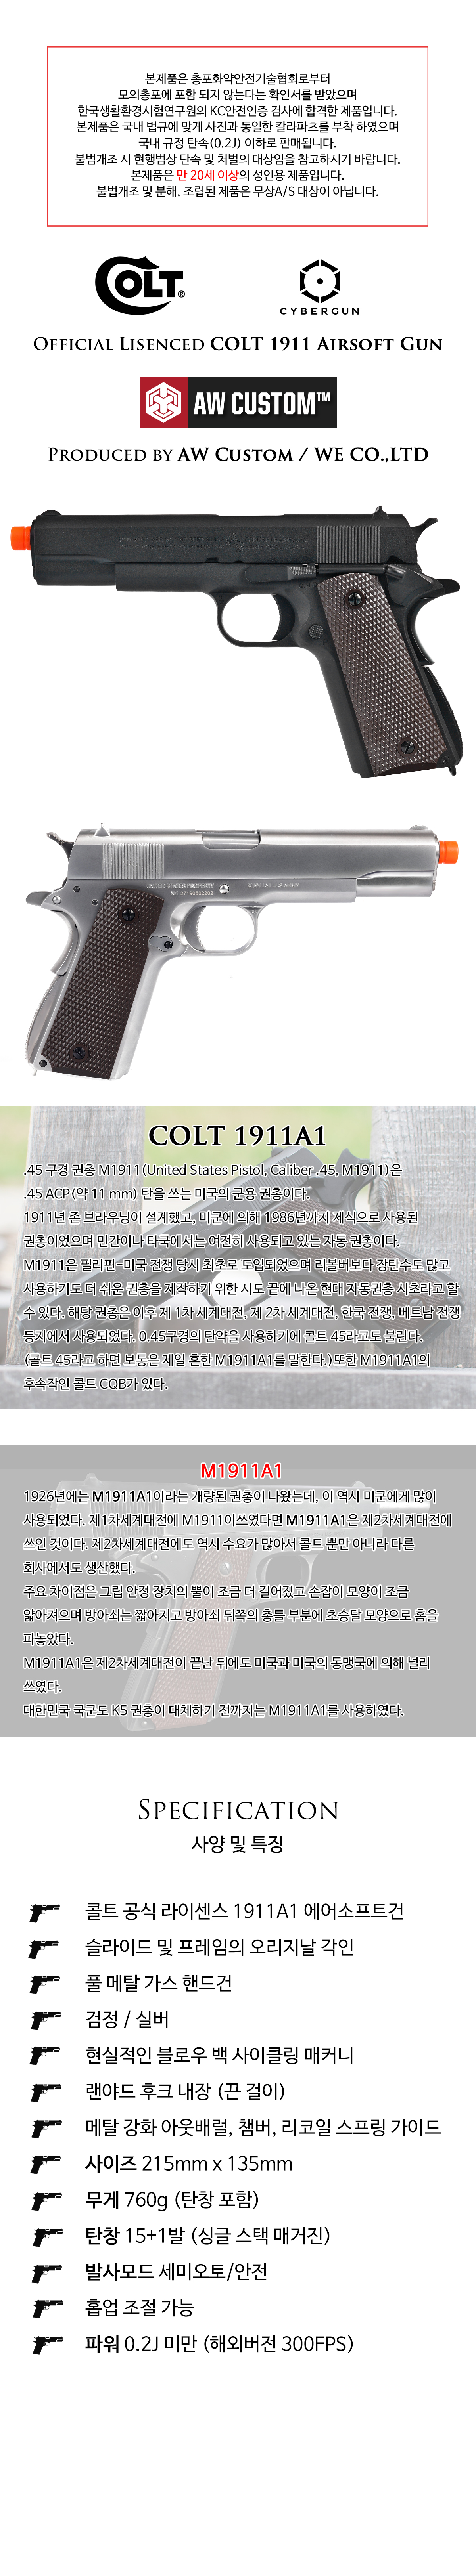 Colt-1911-1페이지_shop1_160514.jpg